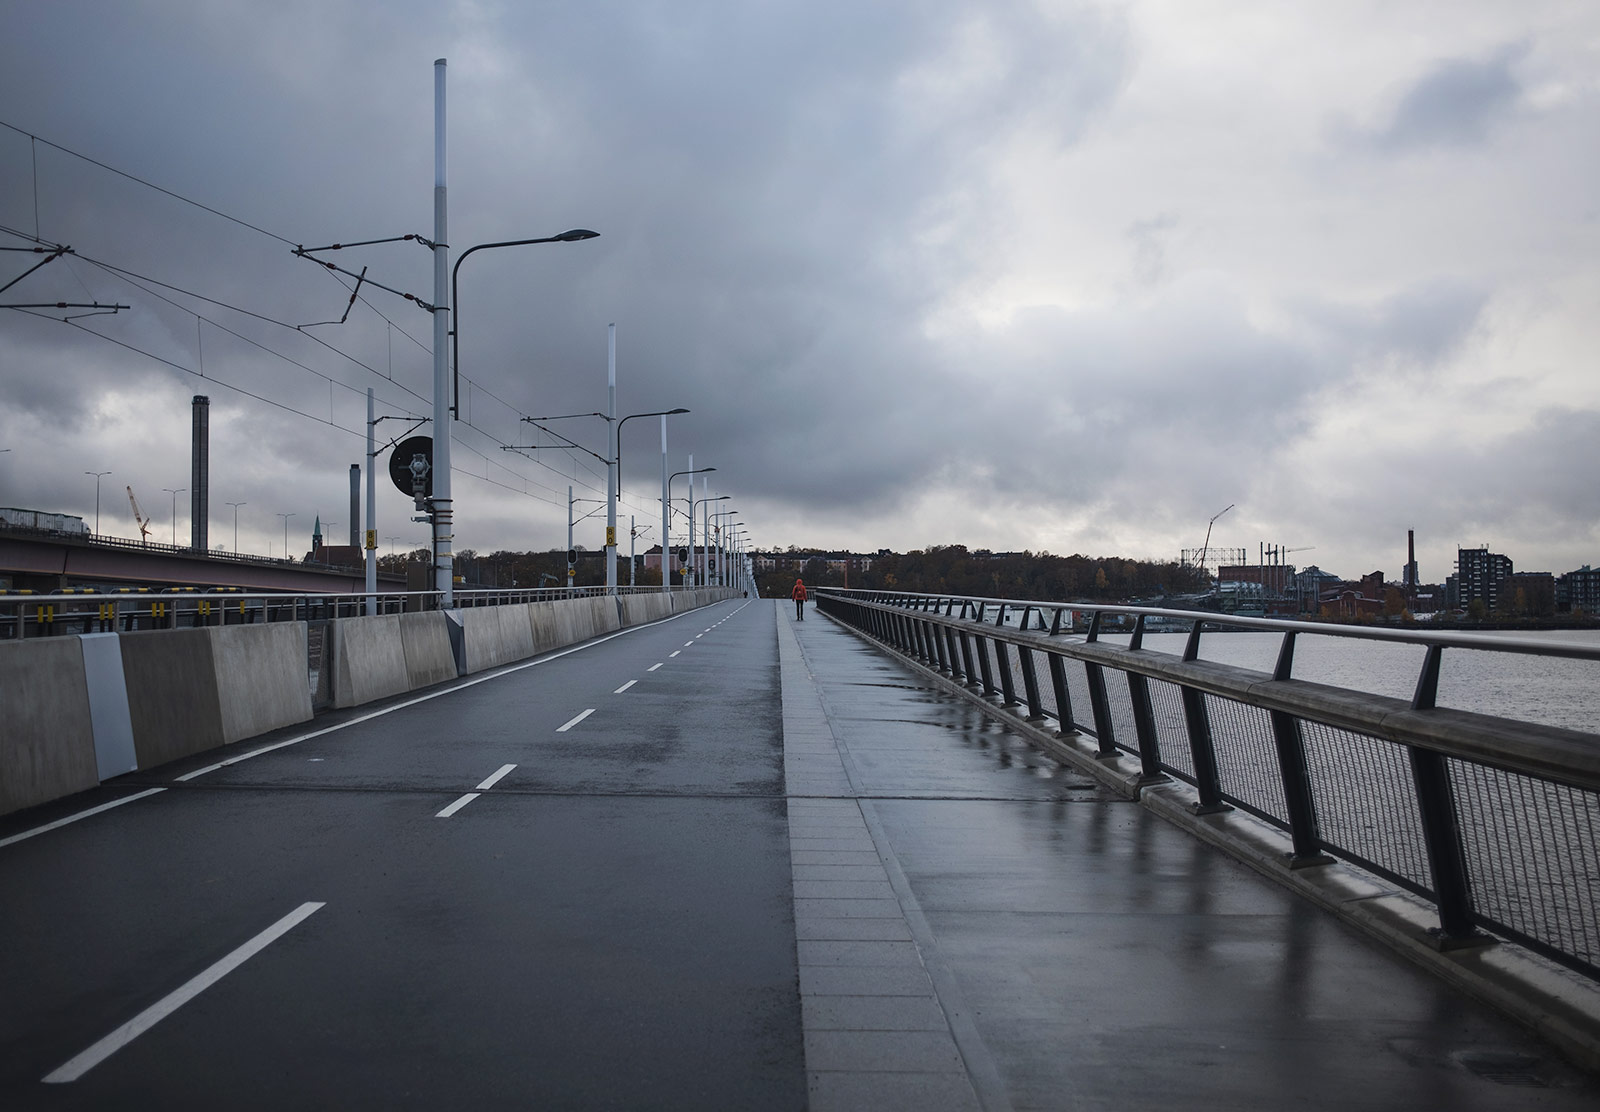 Concrete footbridge and grey skies